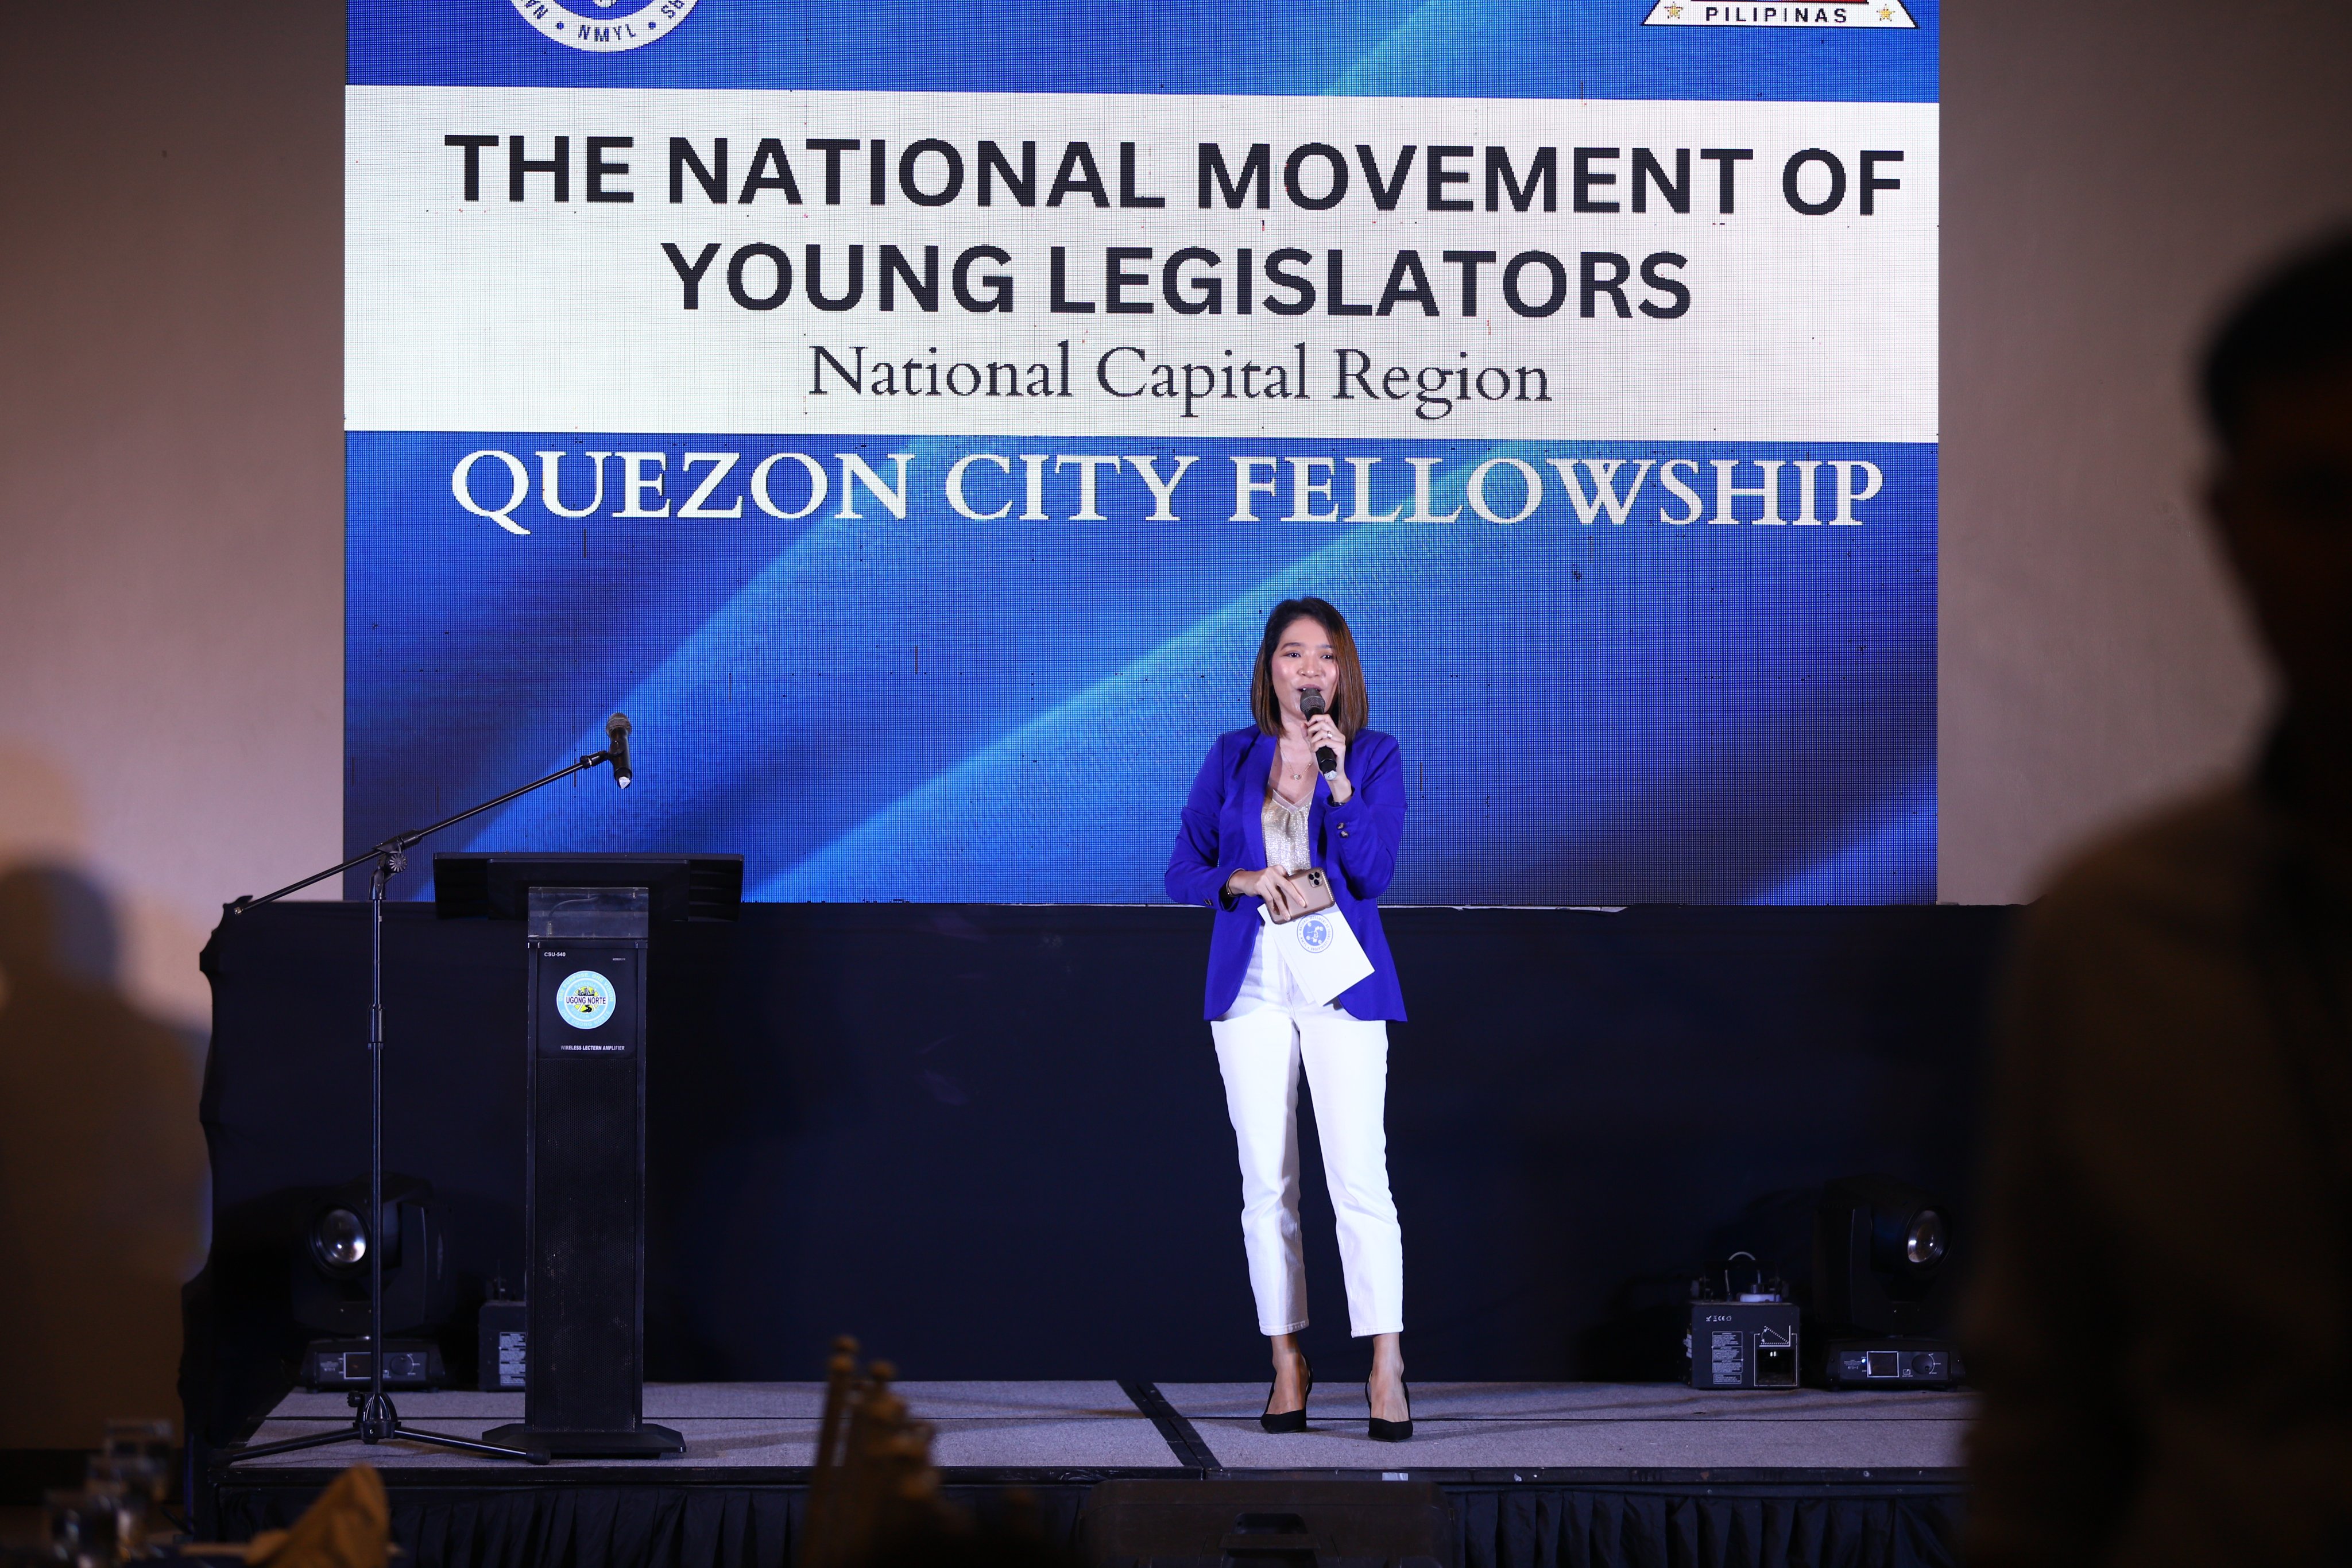 National Movement of Young Legislators